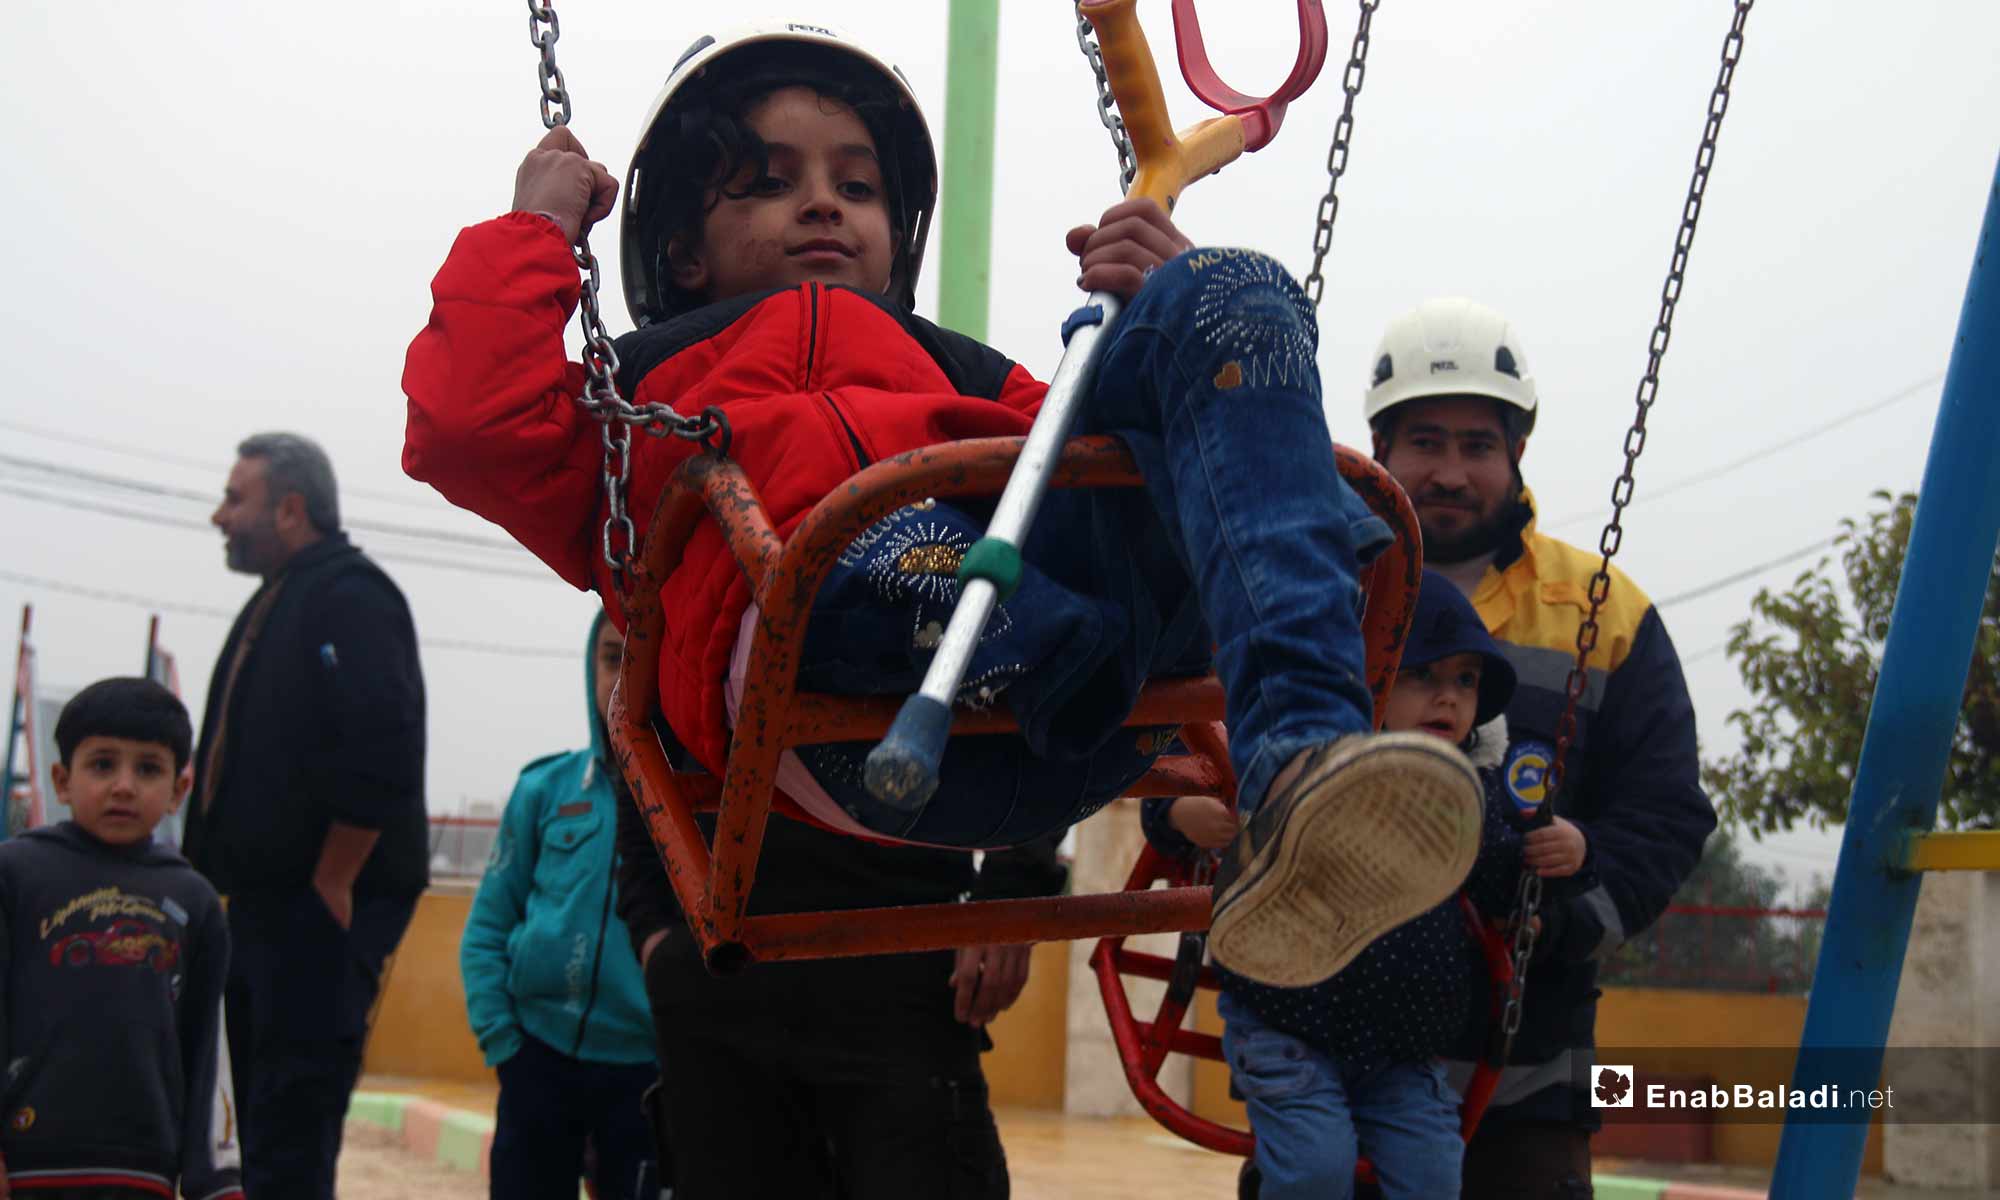 Children play at the al-Dalah Park in the city of Maarrat al-Nu